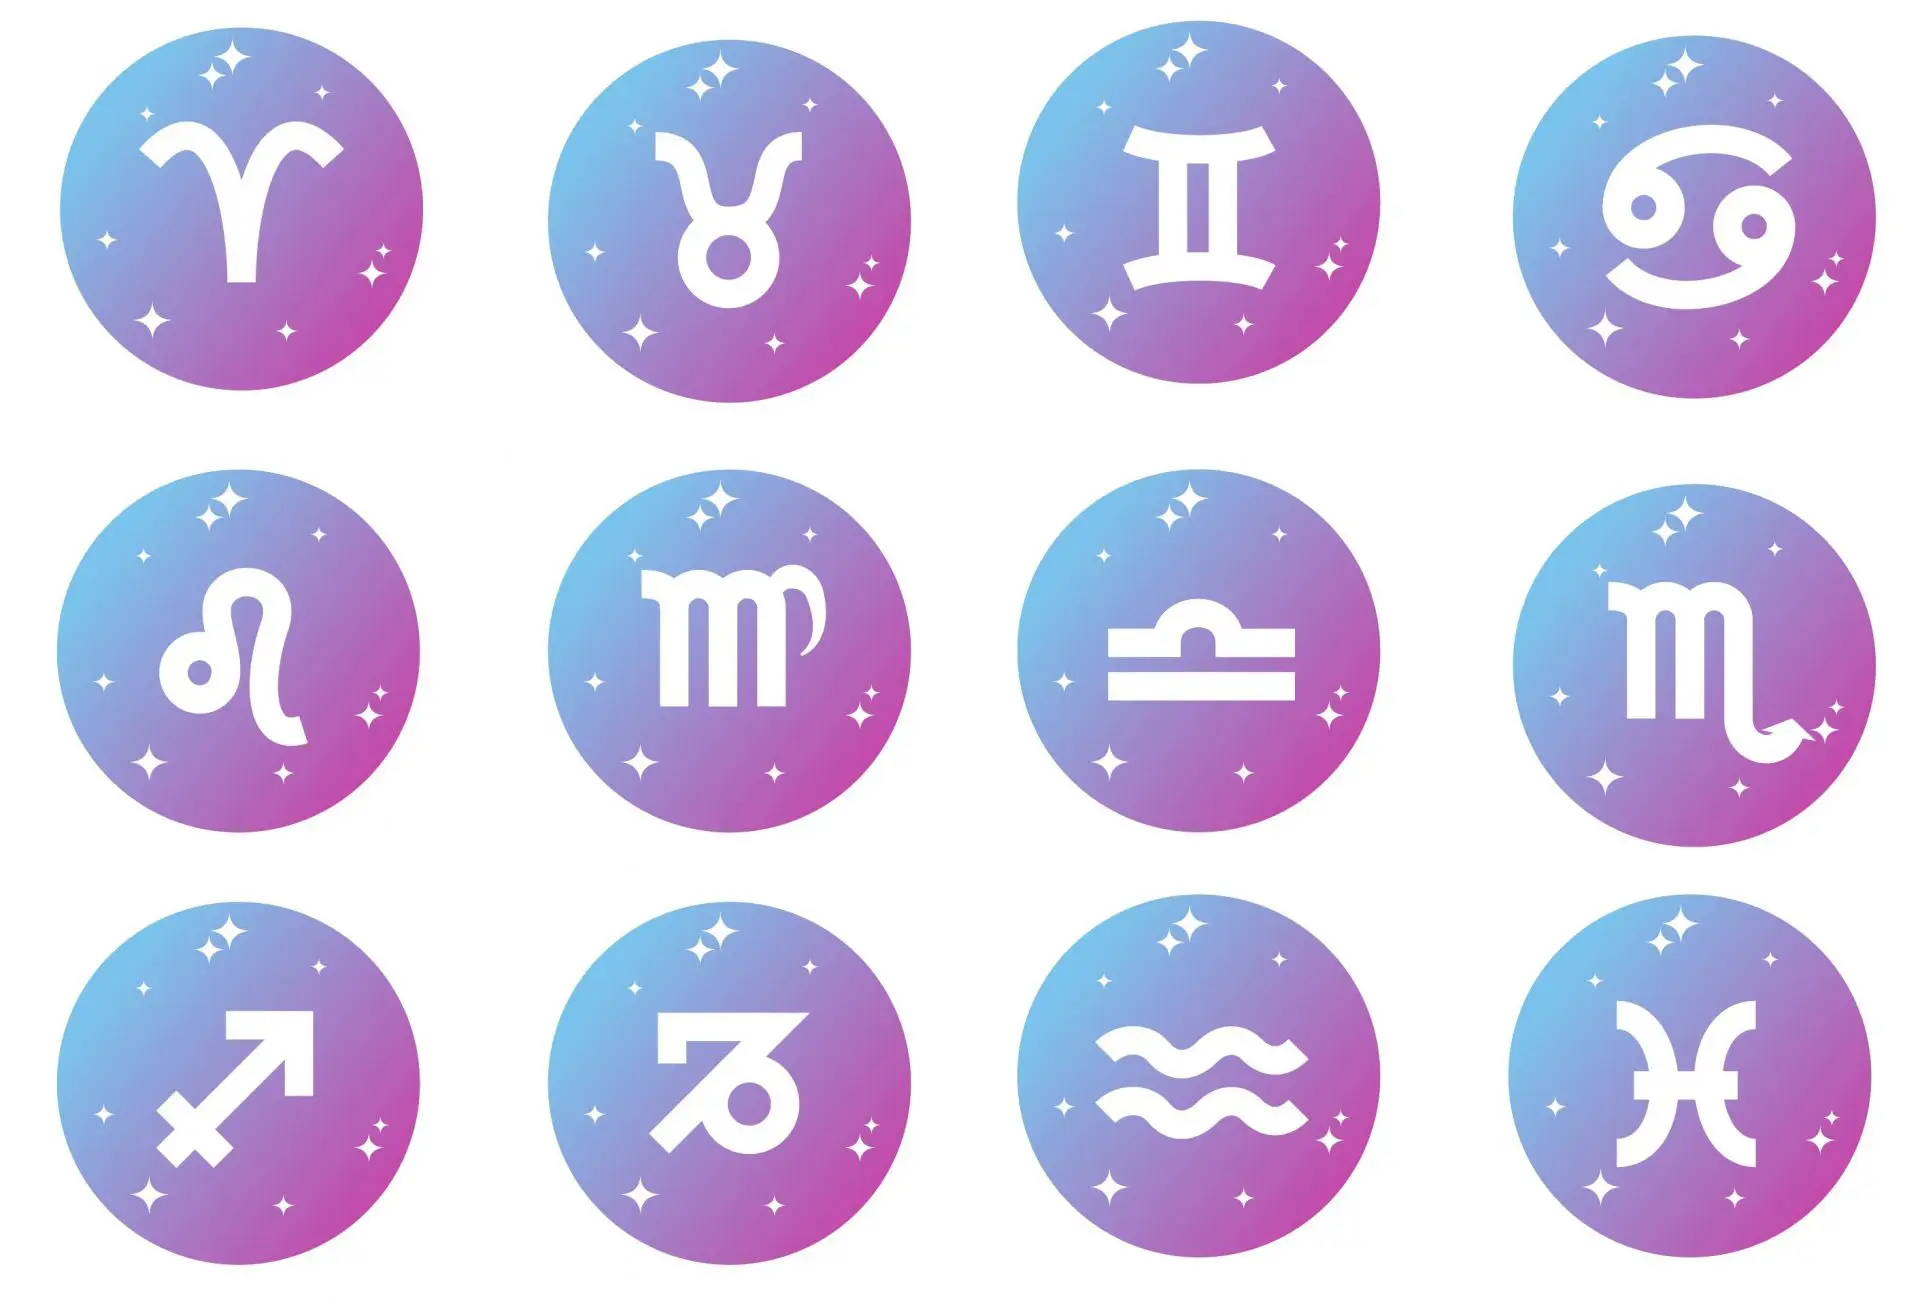 copy and paste astrology symbols